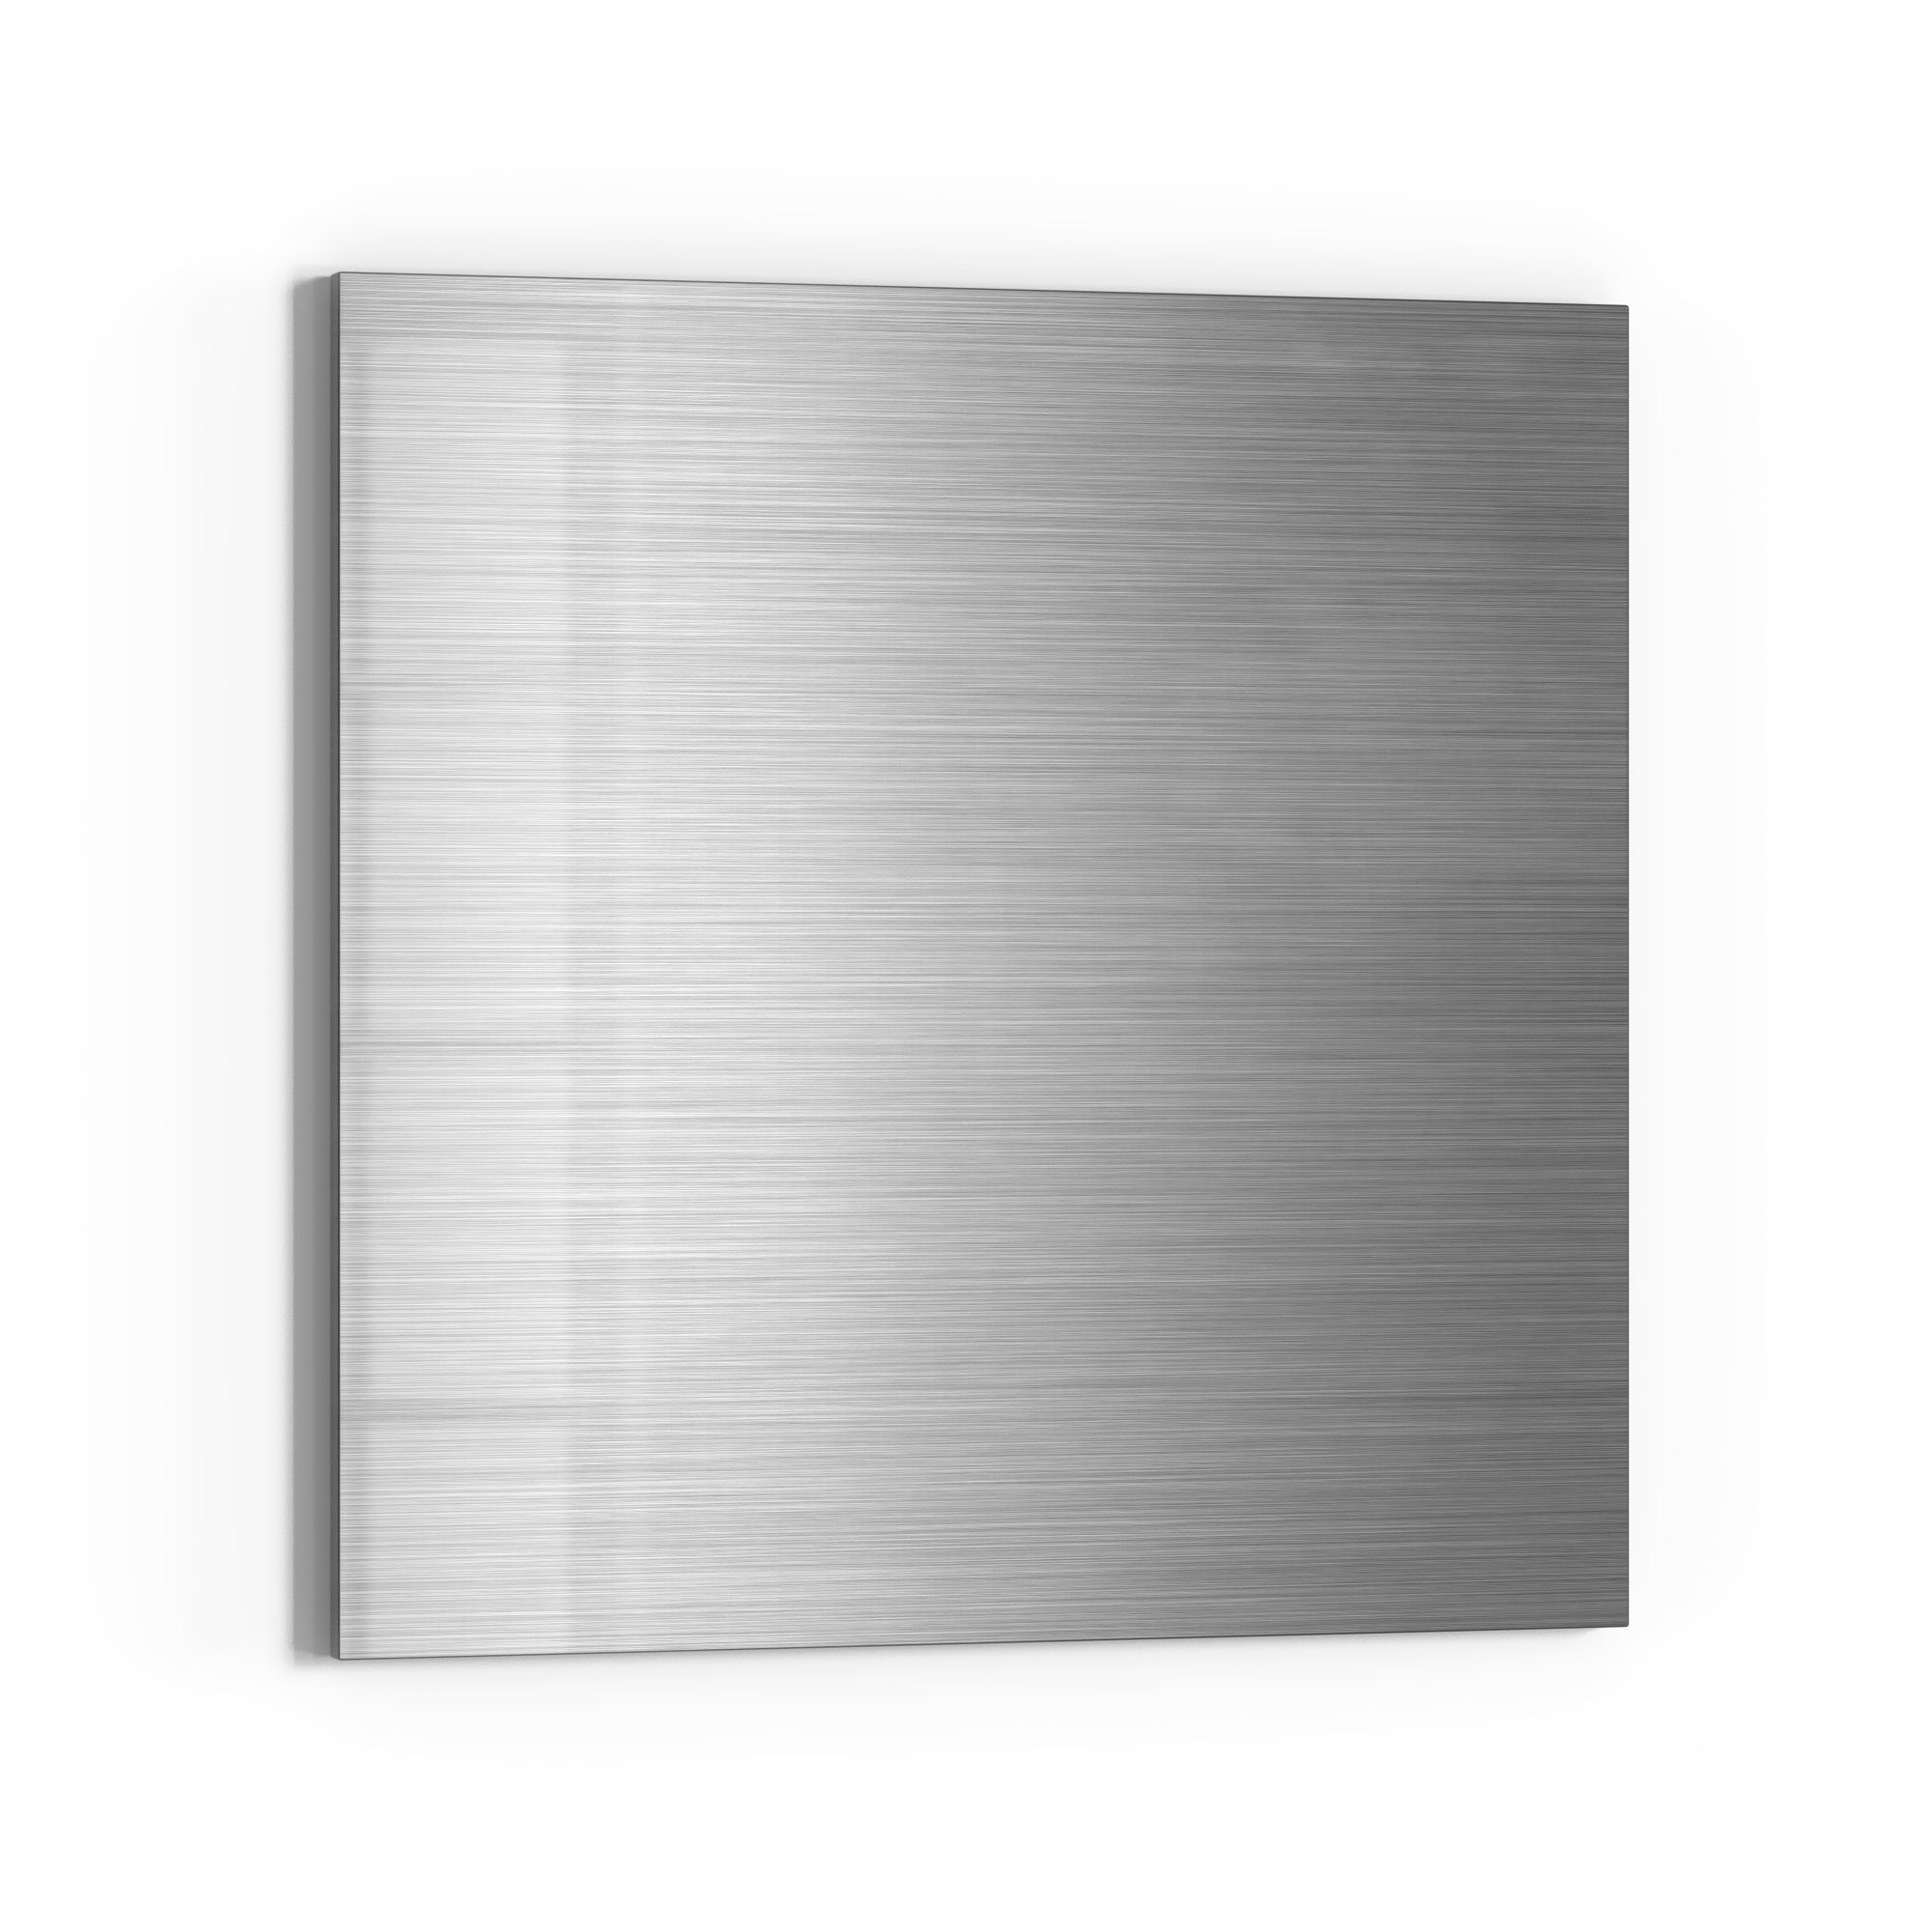 DEQORI Magnettafel 'Gebürstetes Aluminium', Whiteboard Pinnwand beschreibbar